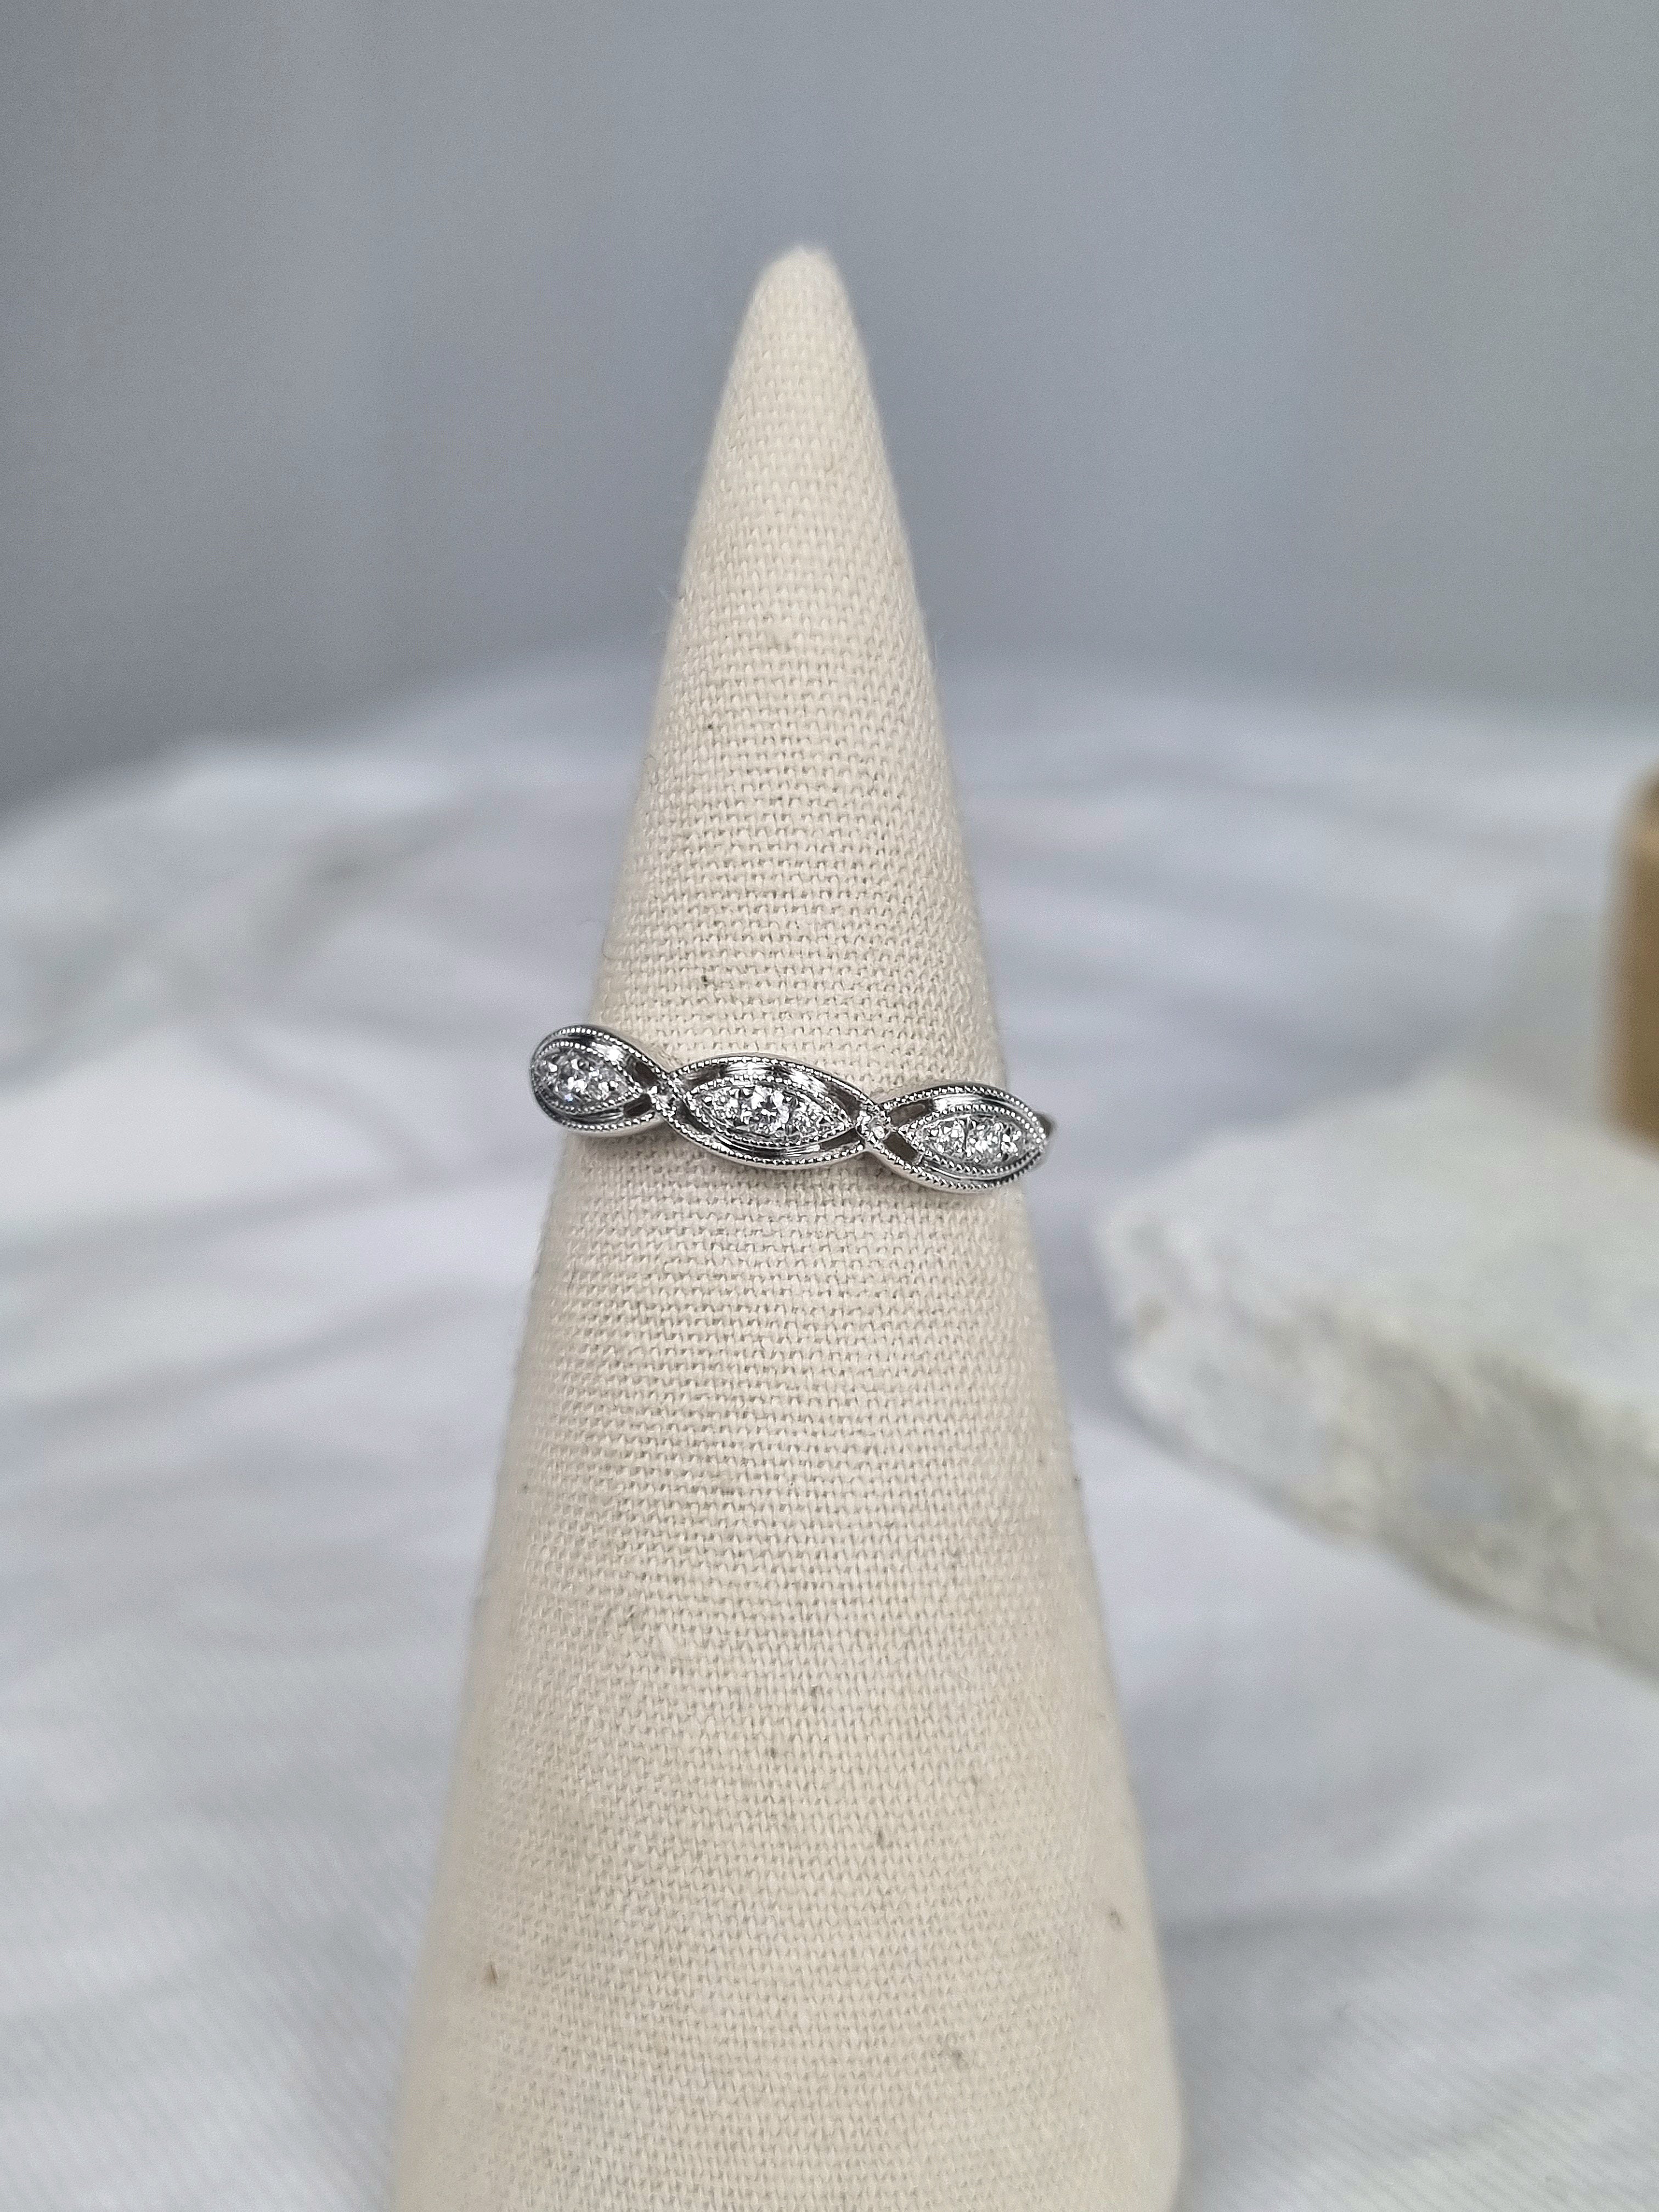 18ct White Gold Diamond dress ring, 0.10ct total